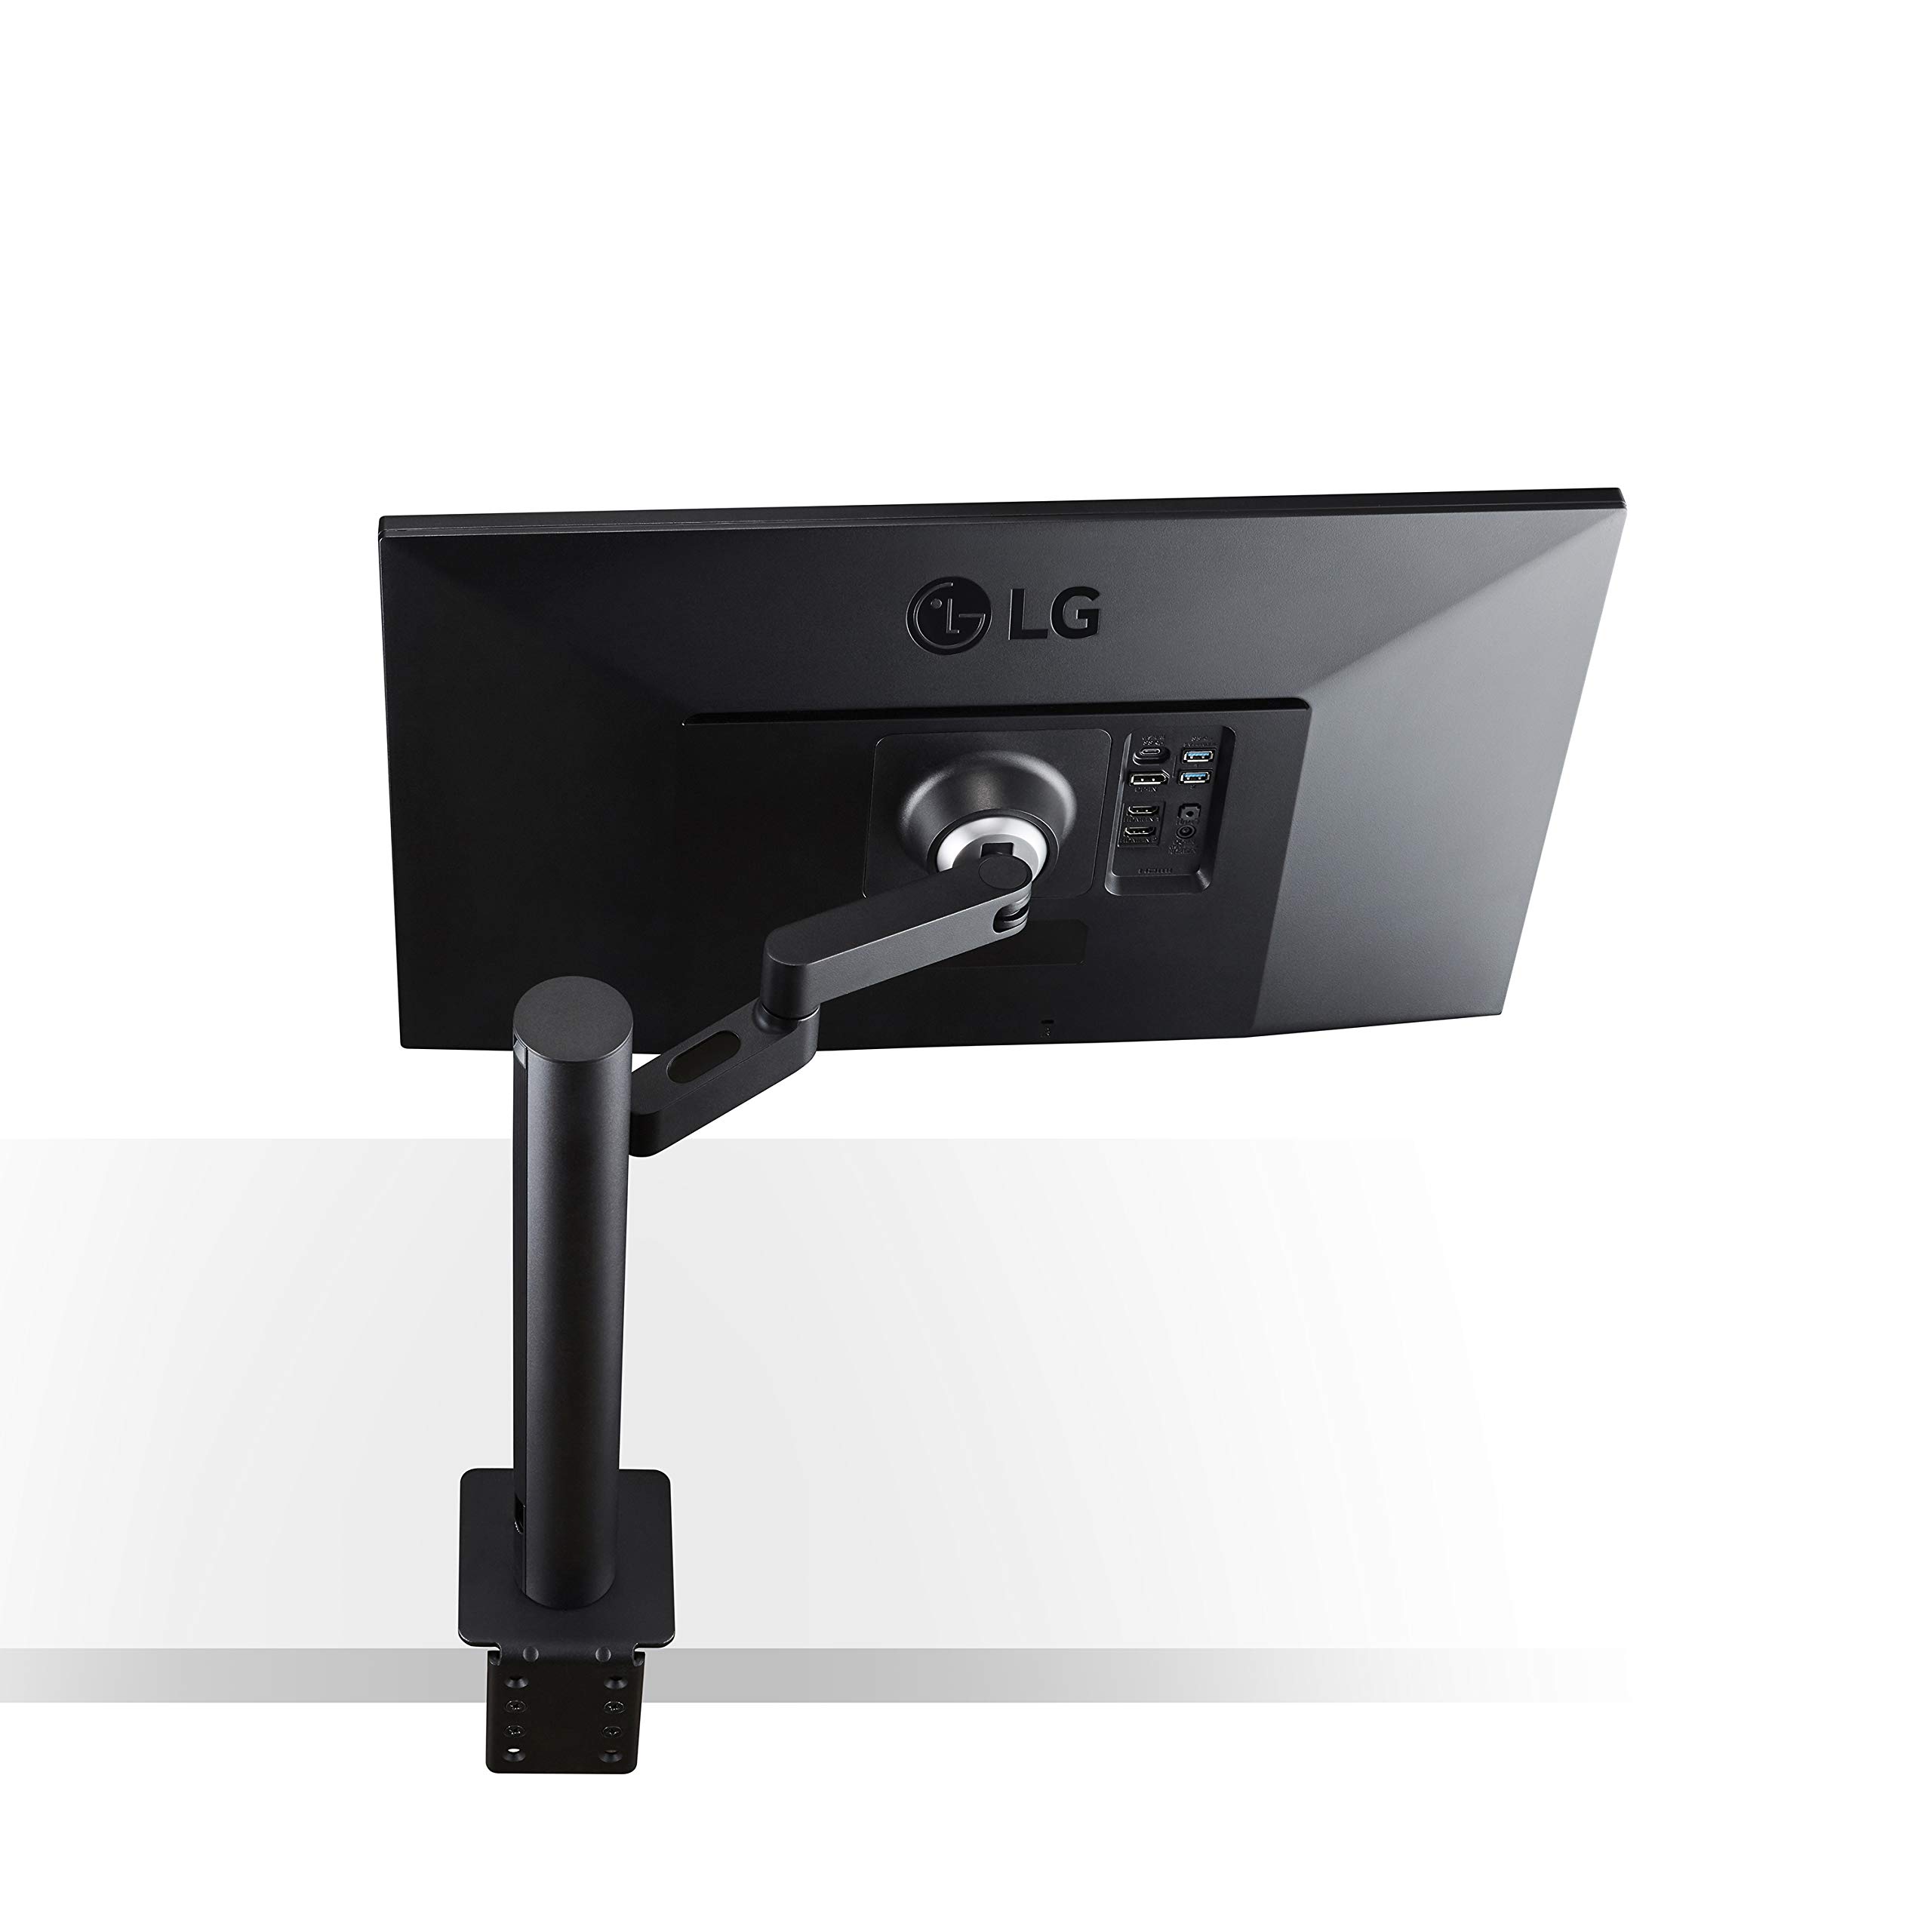 LG 27UN880-B Ultrafine Monitor 27” UHD (3840 x 2160) IPS Display, sRGB 99% Color Gamut, VESA DisplayHDR 400, USB Type-C, Ergo Stand - Black